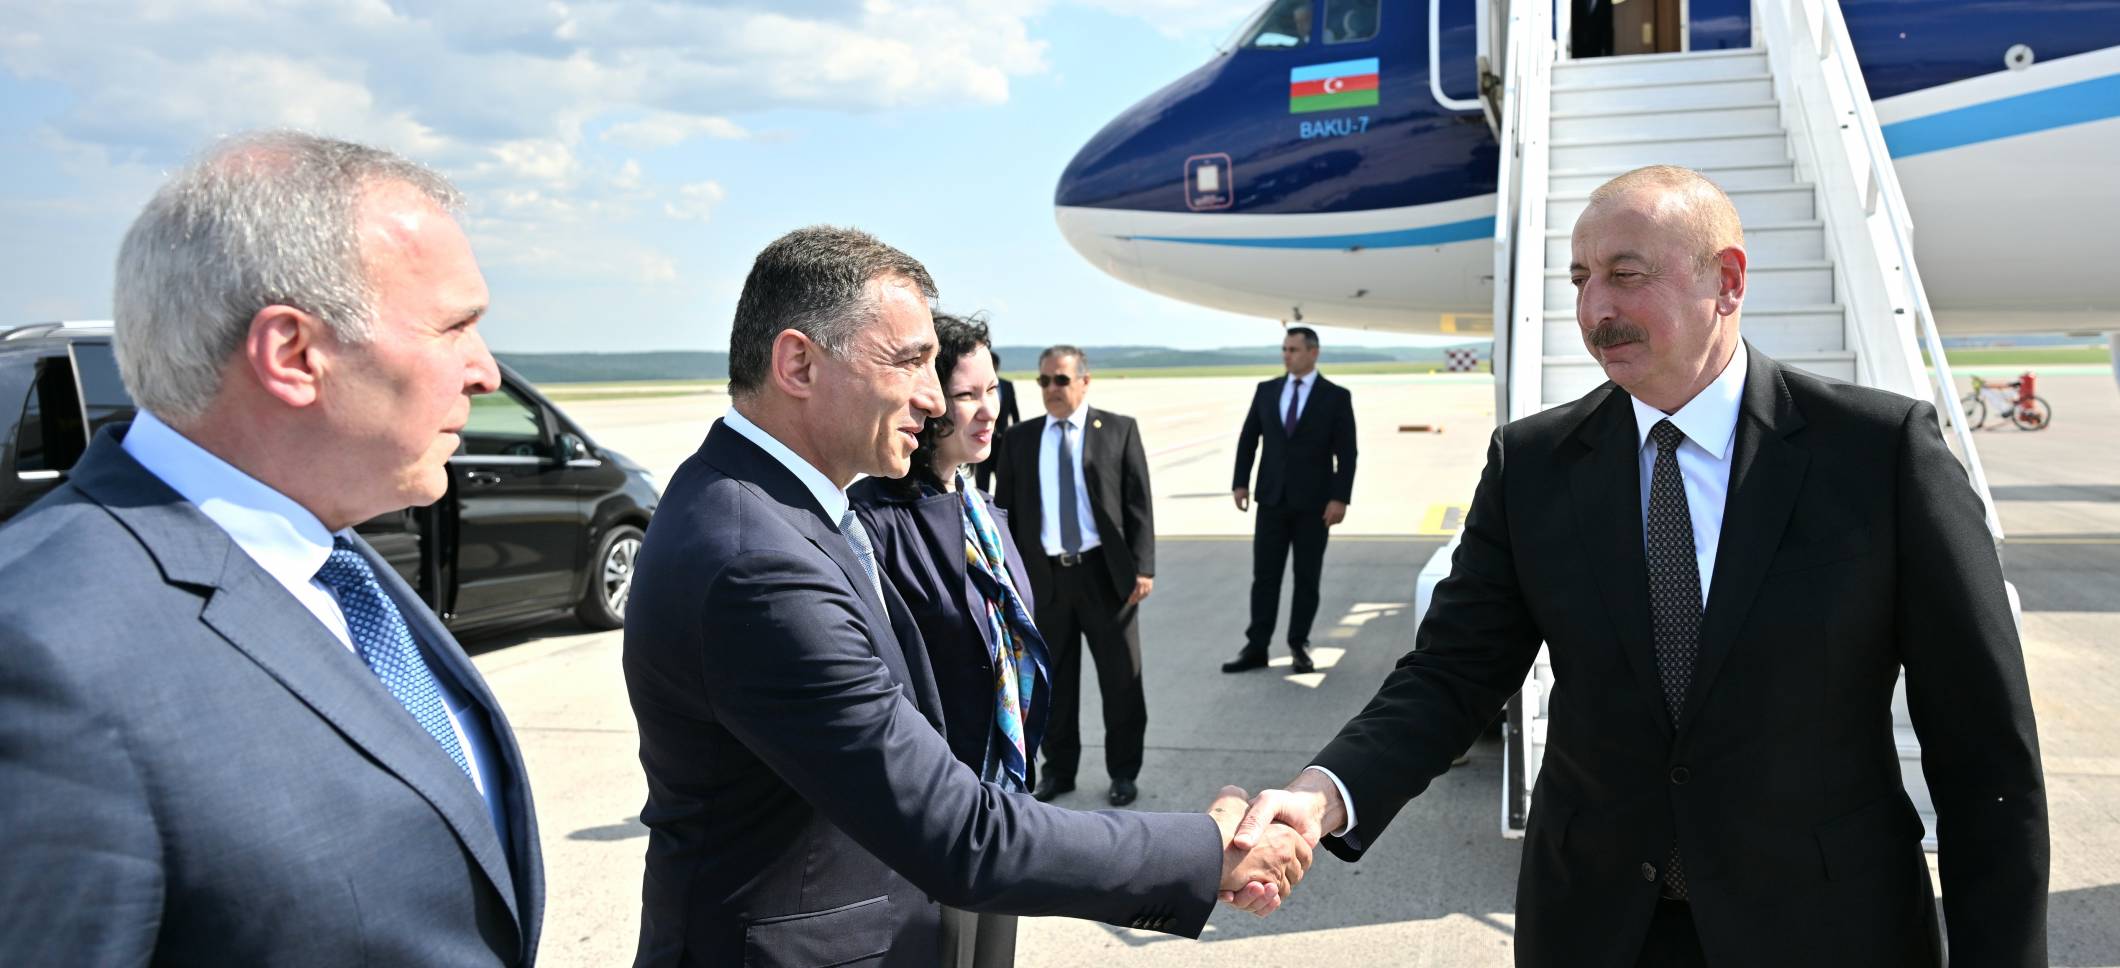 Ilham Aliyev embarked on visit to Moldova